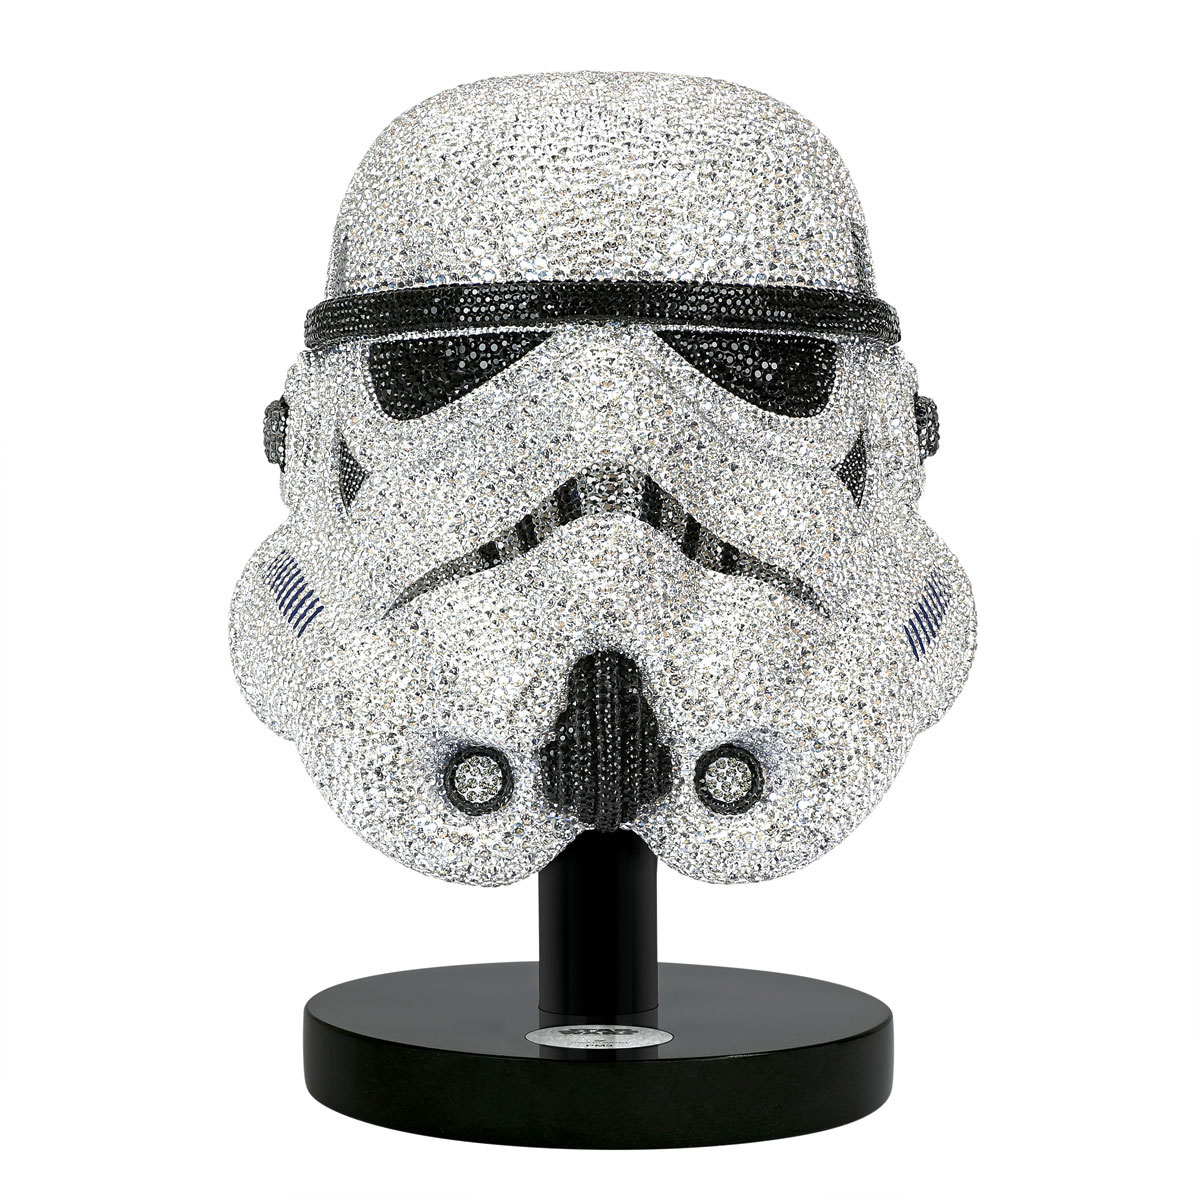 Swarovski Crystal Myriad Star Wars Stormtrooper Helmet Limited Edition Sculpture